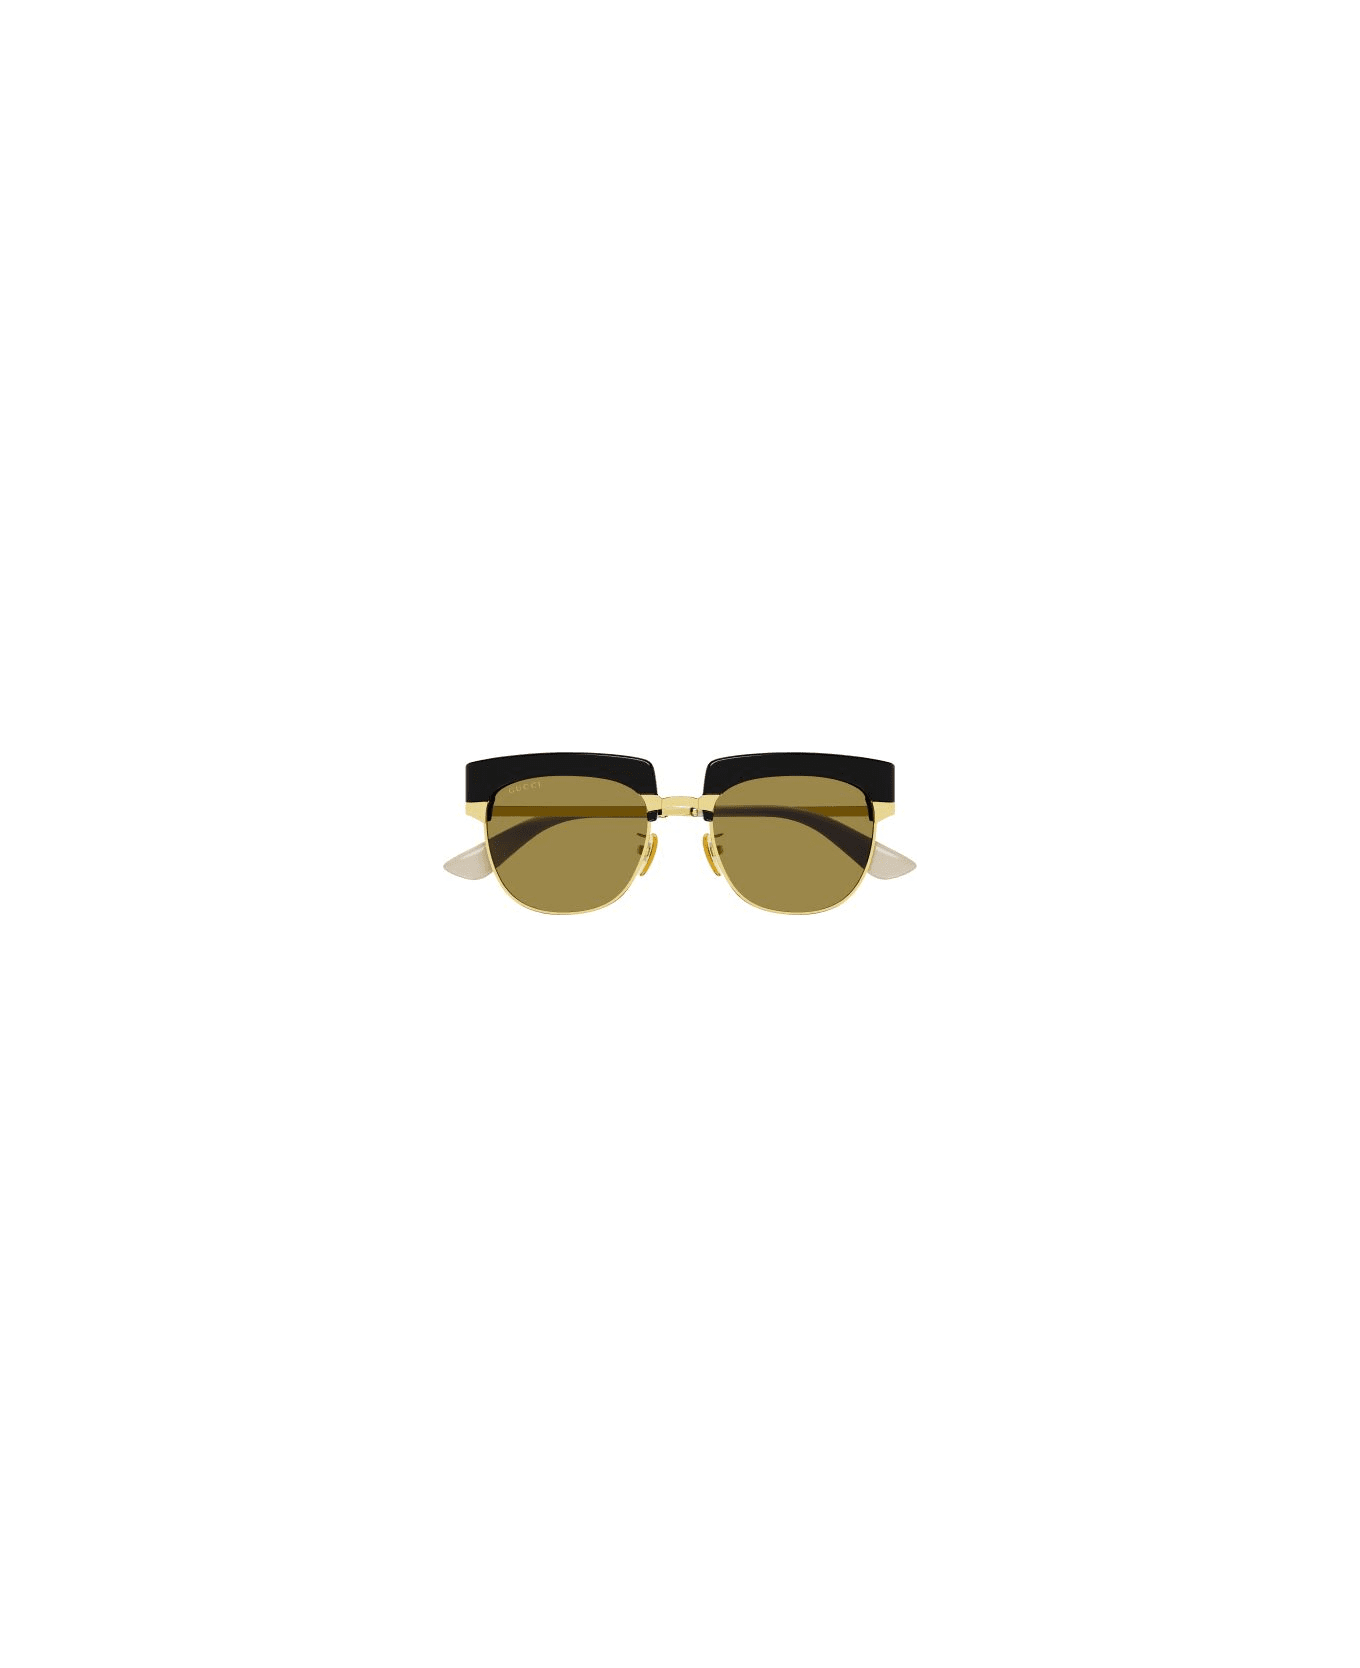 Gucci Eyewear 1eap4is0a - 001 gold gold brown